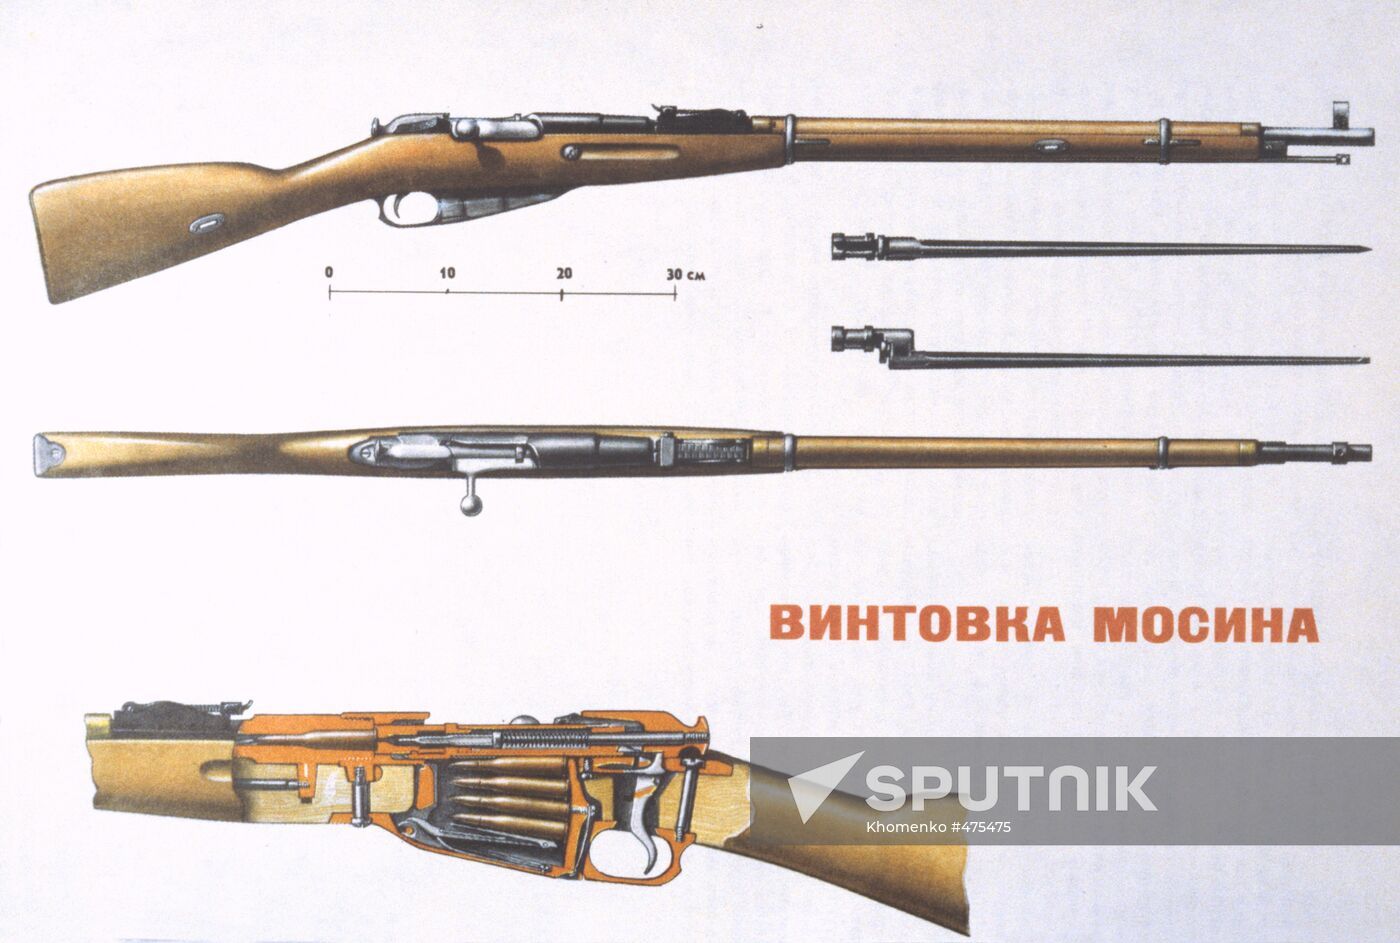 Mosin rifle 7.62-mm